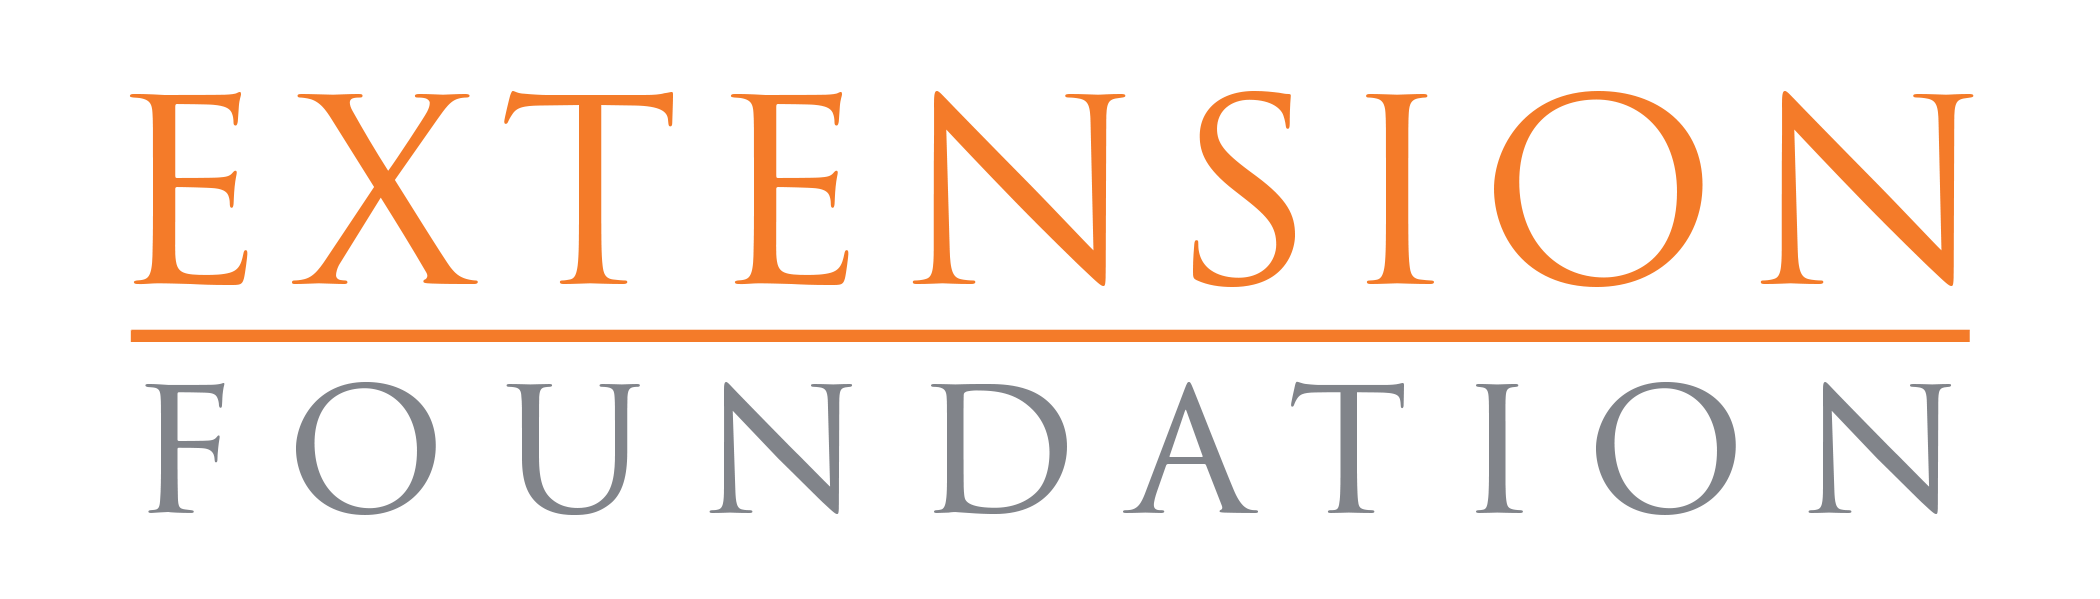 Extension Foundation Logo New